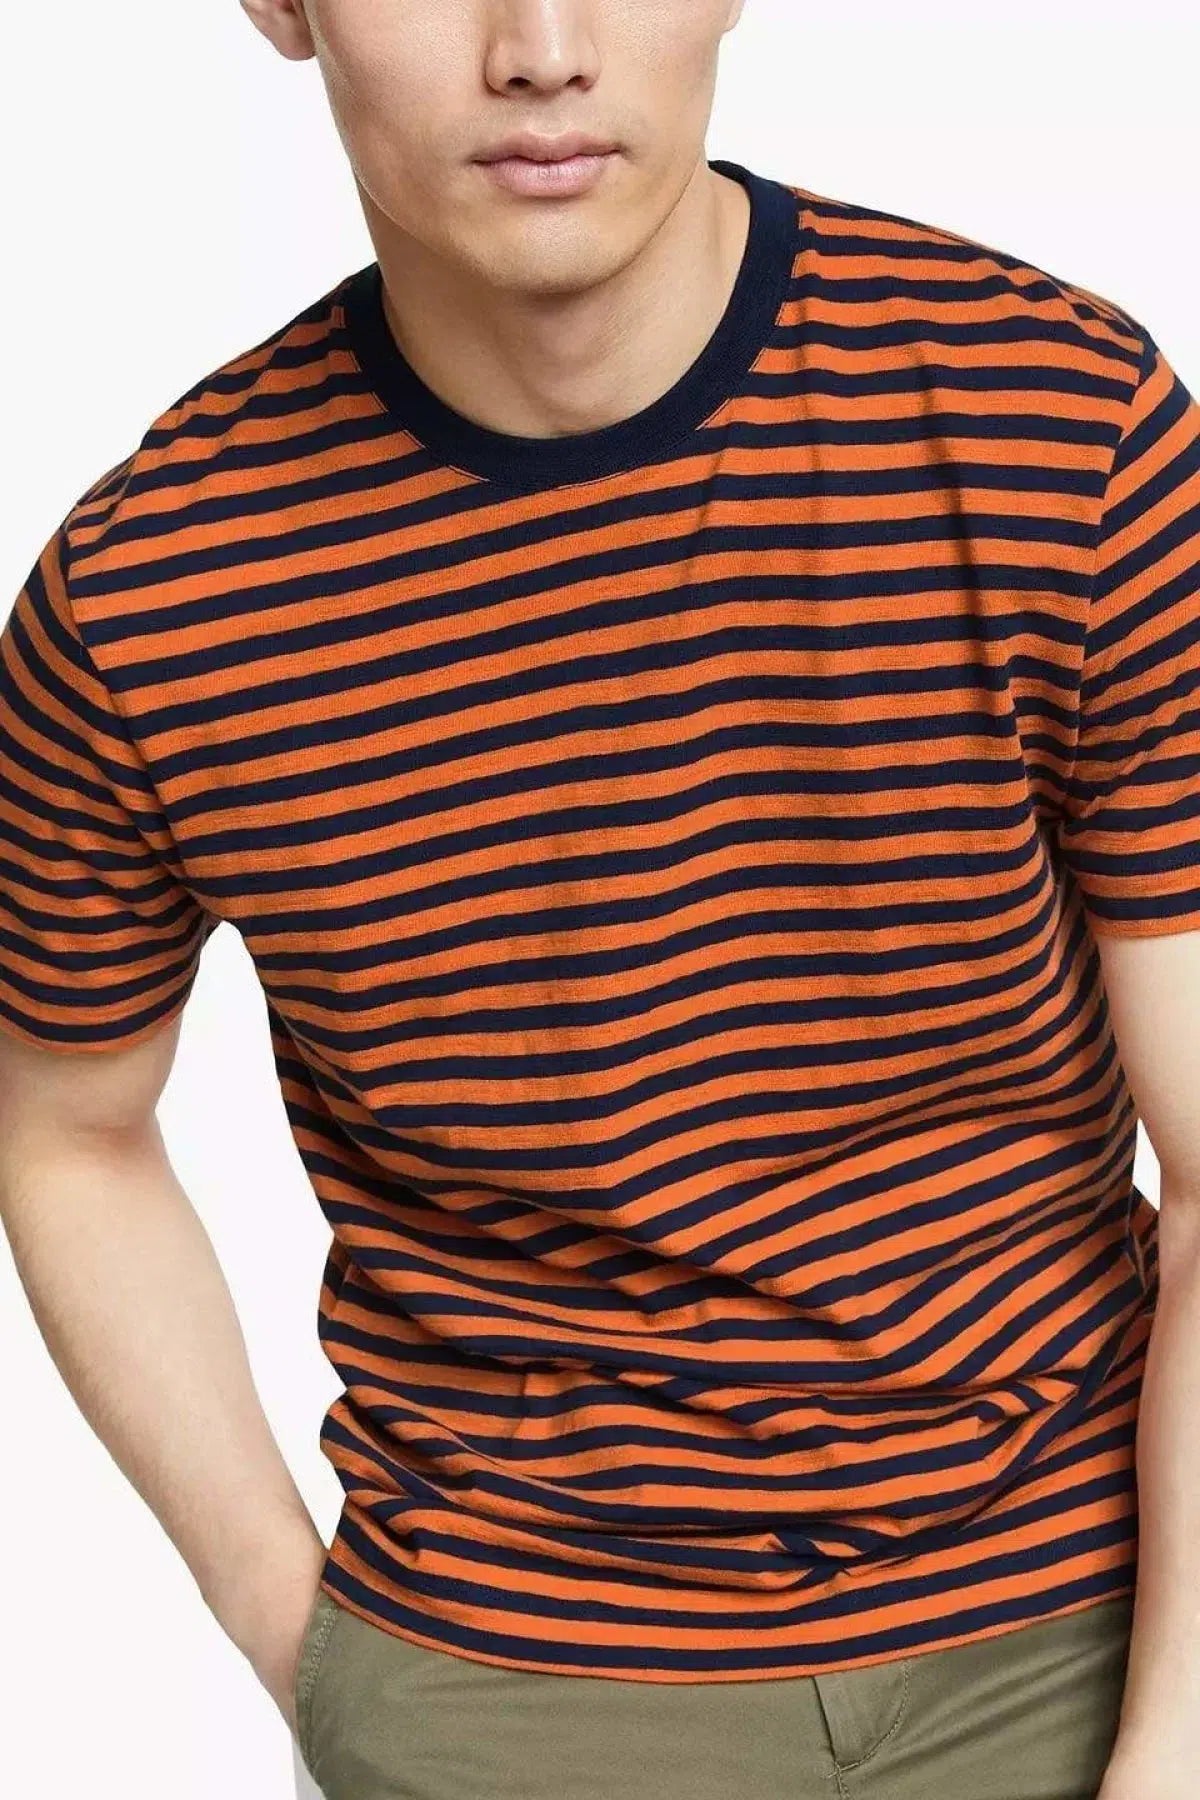 John Lewis Supima Cotton Striped T-Shirt Orange/Navy / S